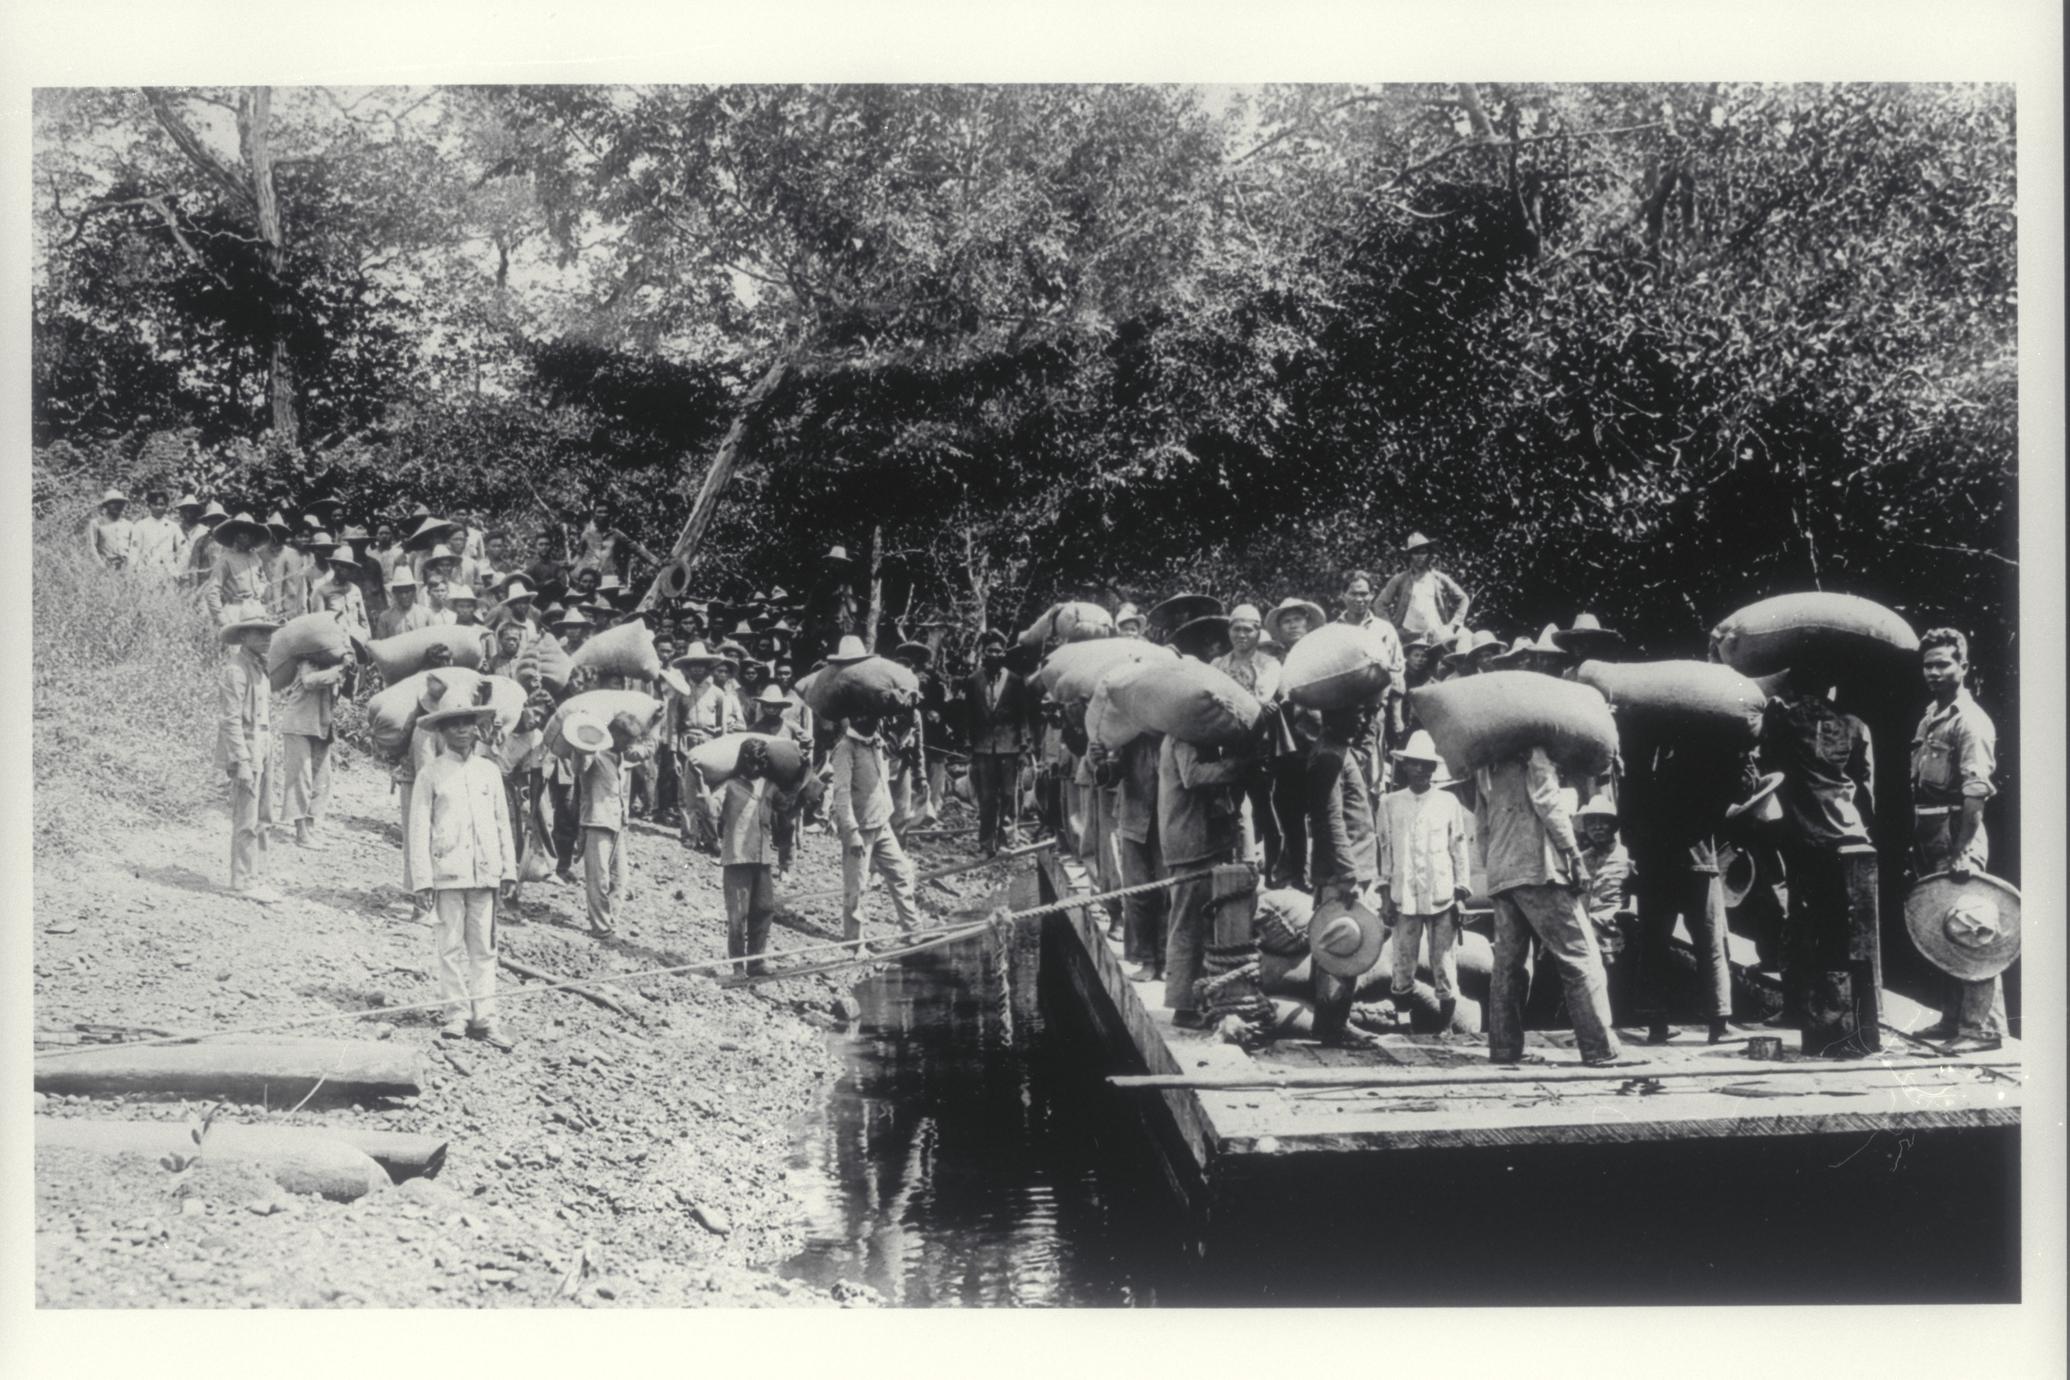 Hauling sacks to river, ca. 1920-1930